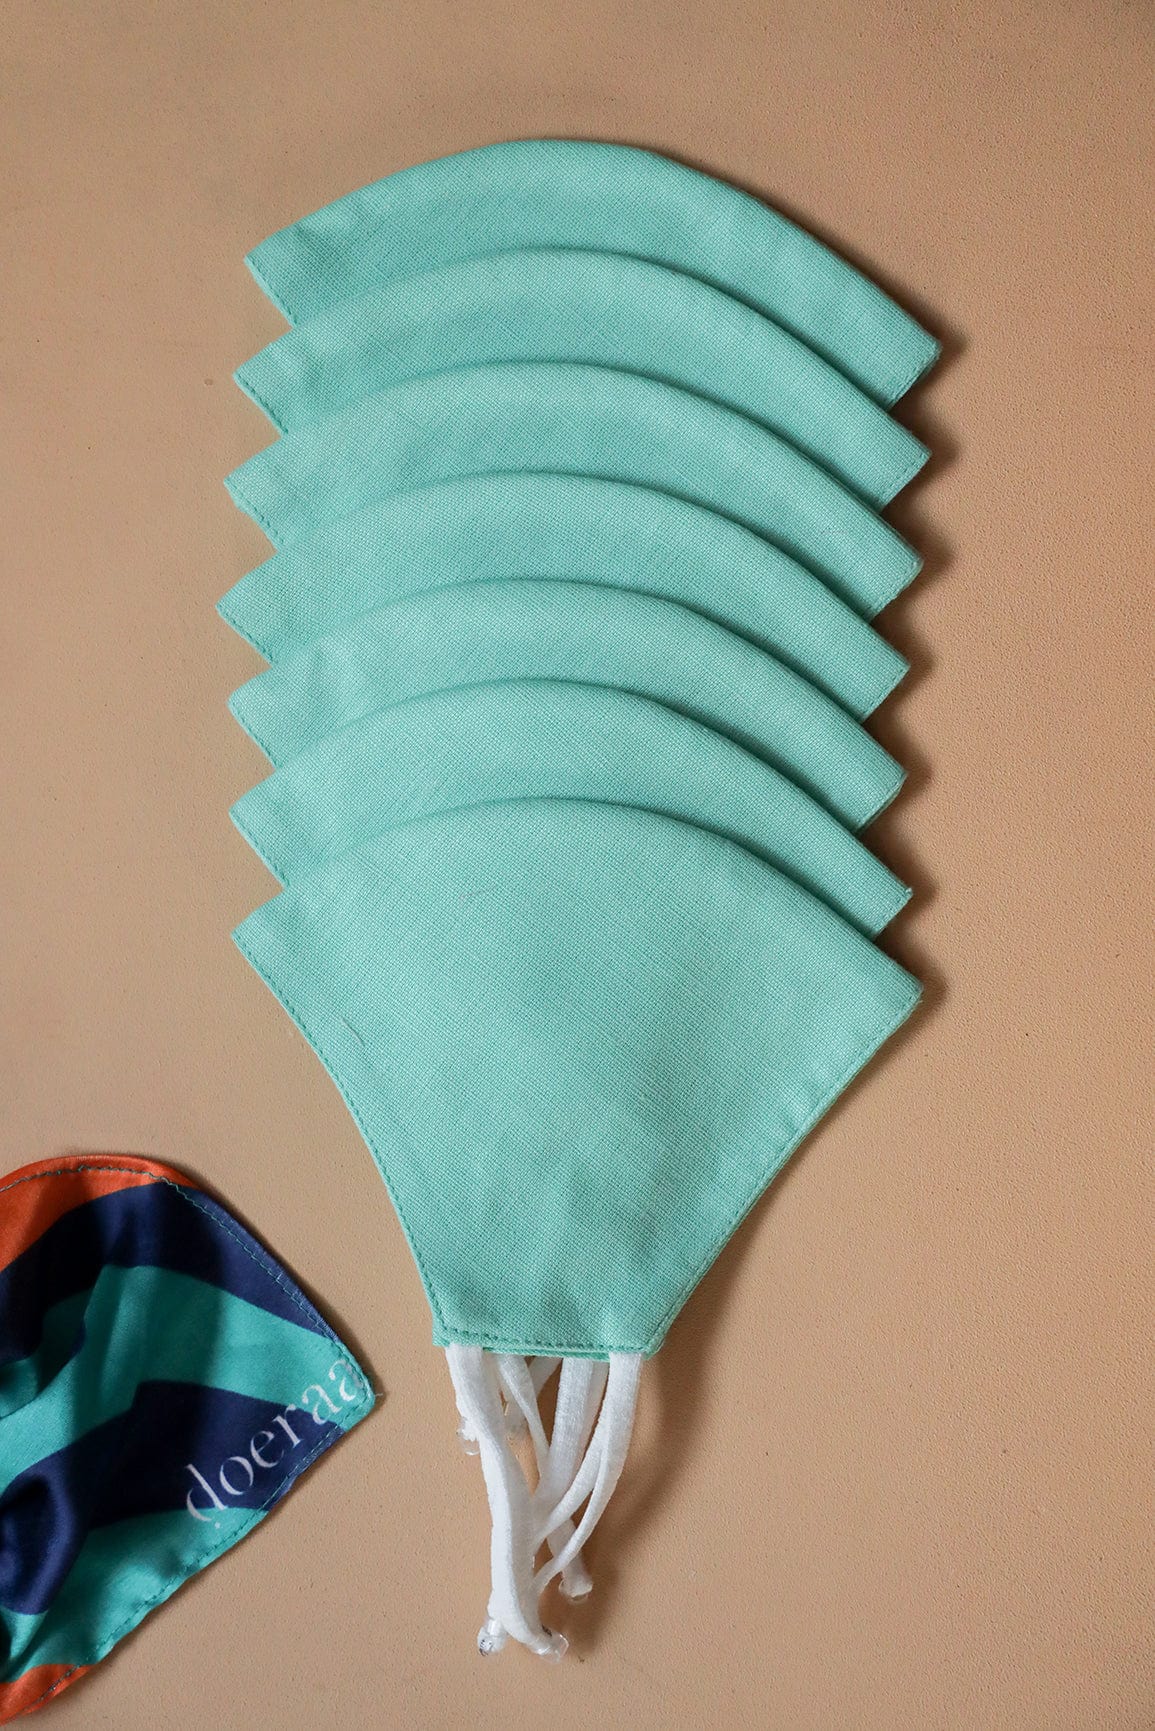 doeraa Masks Sea Green Soft Adjustable Triple Layer Cotton Linen Masks: Pack of 7